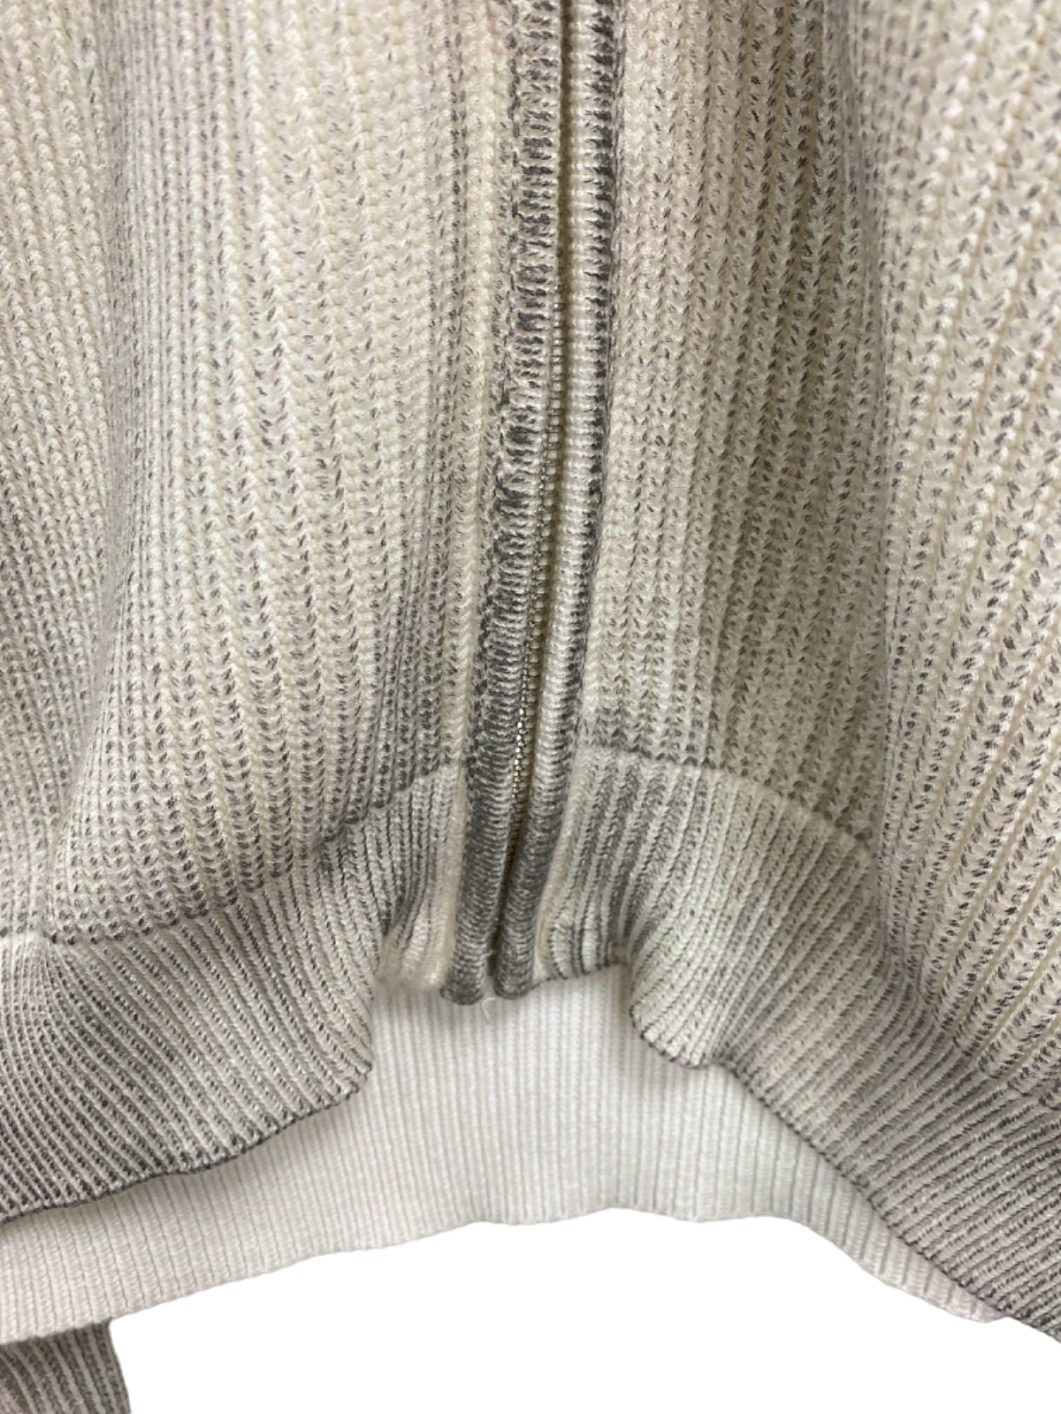 JCAESAR Off White Zip-Up Ribbed Sweater UK Size L